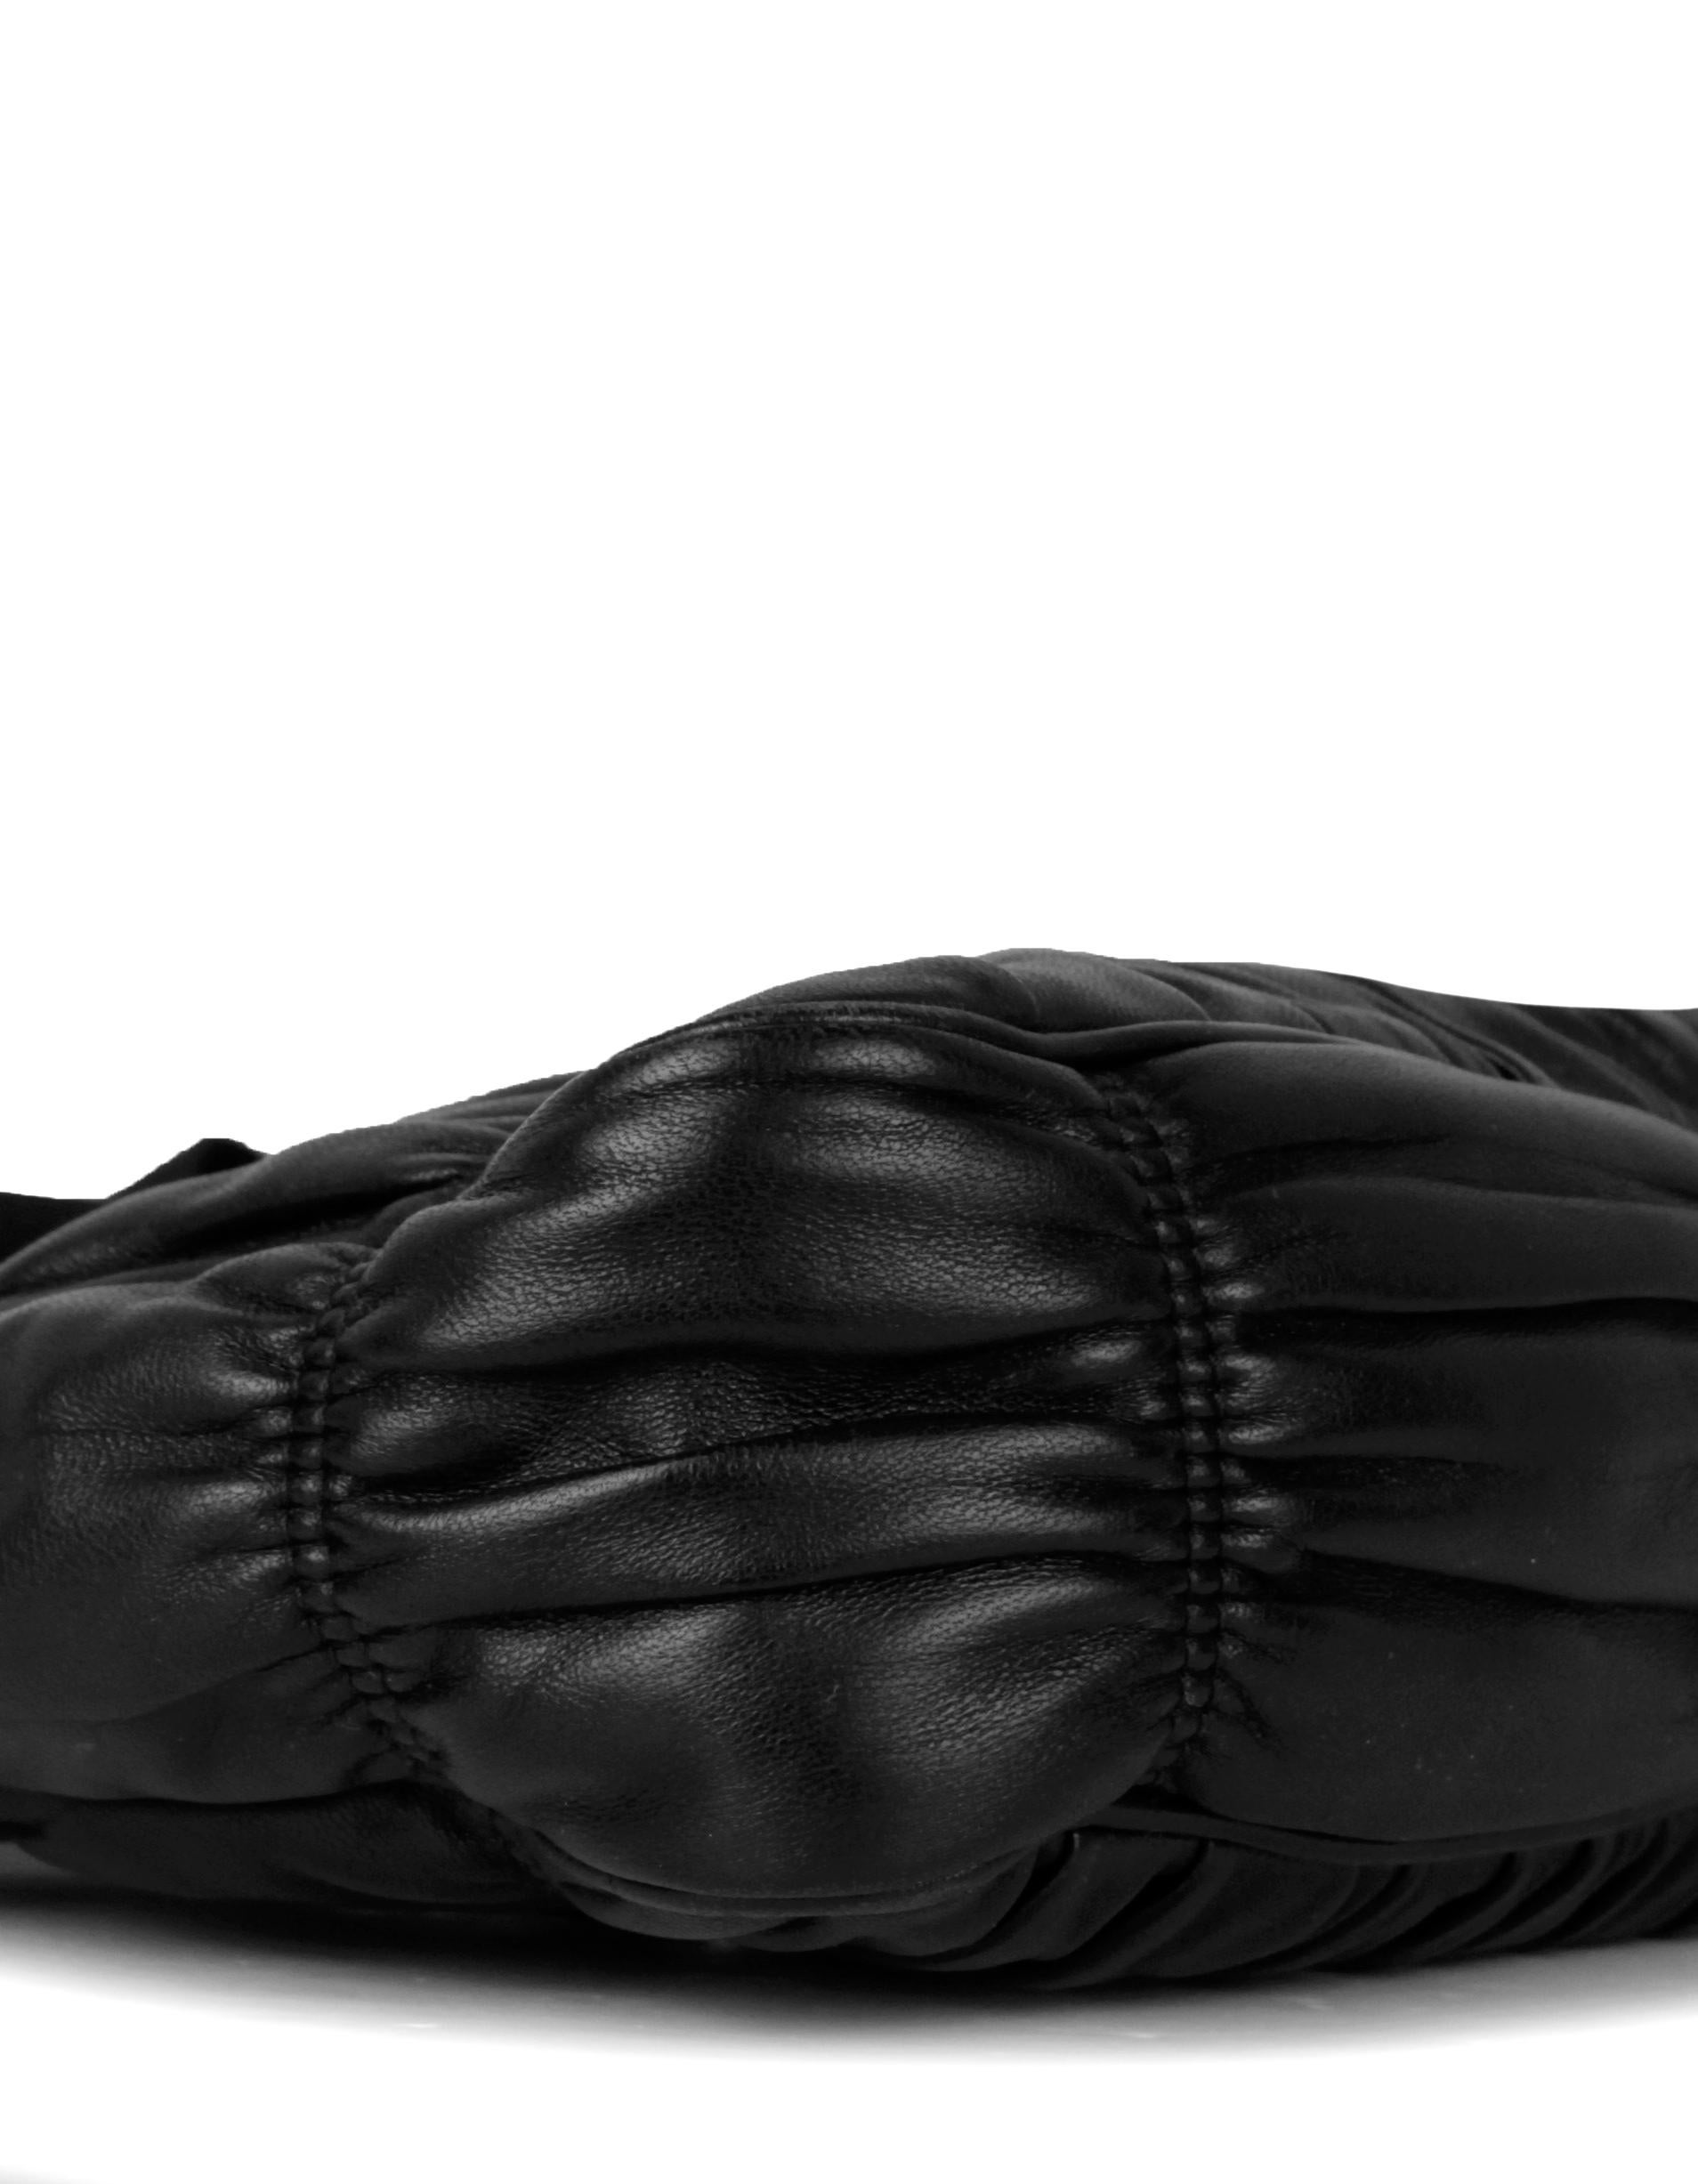 Prada Black Leather Re-Edition 2005 Nappa Gaufré Crossbody Bag In Excellent Condition In New York, NY